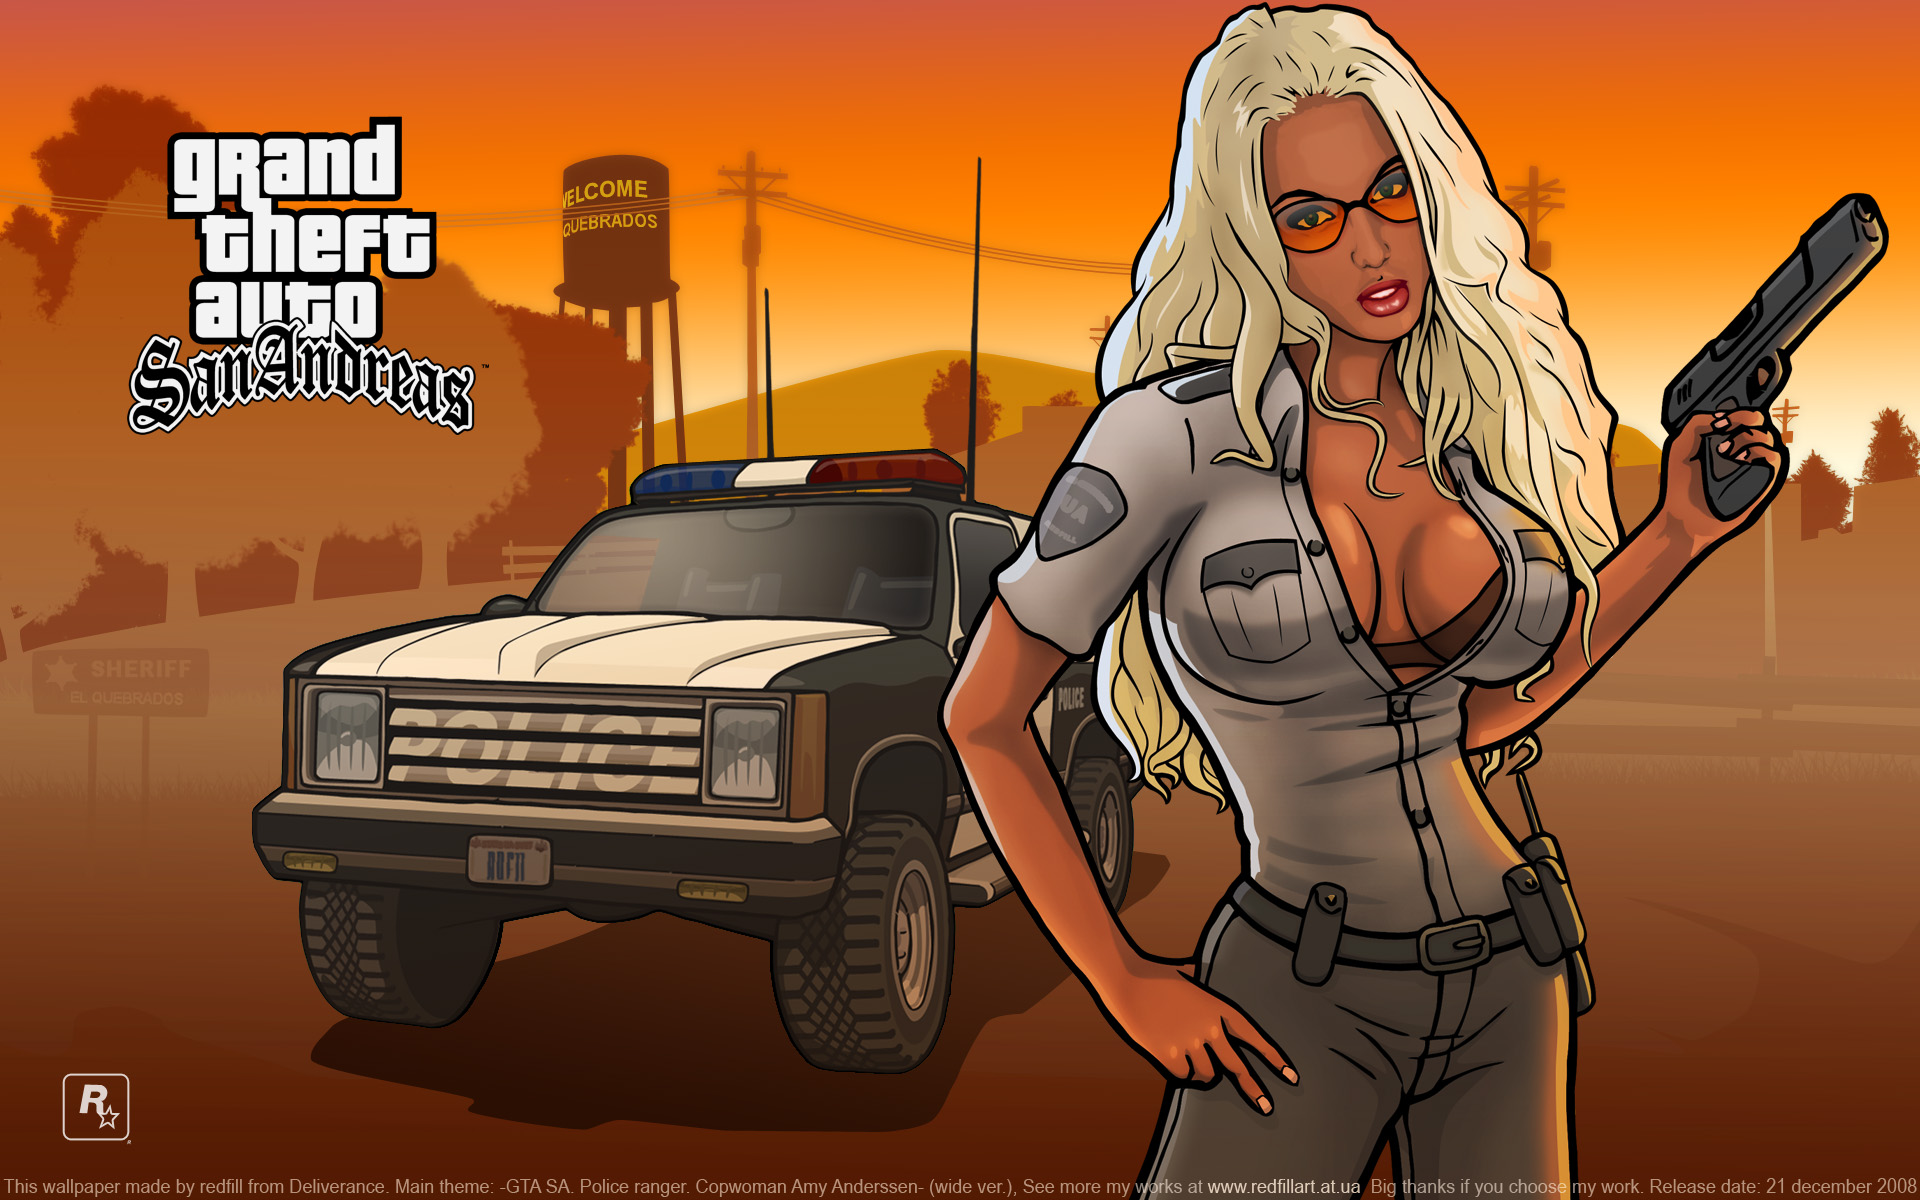 Арт к игре Grand Theft Auto: San Andreas